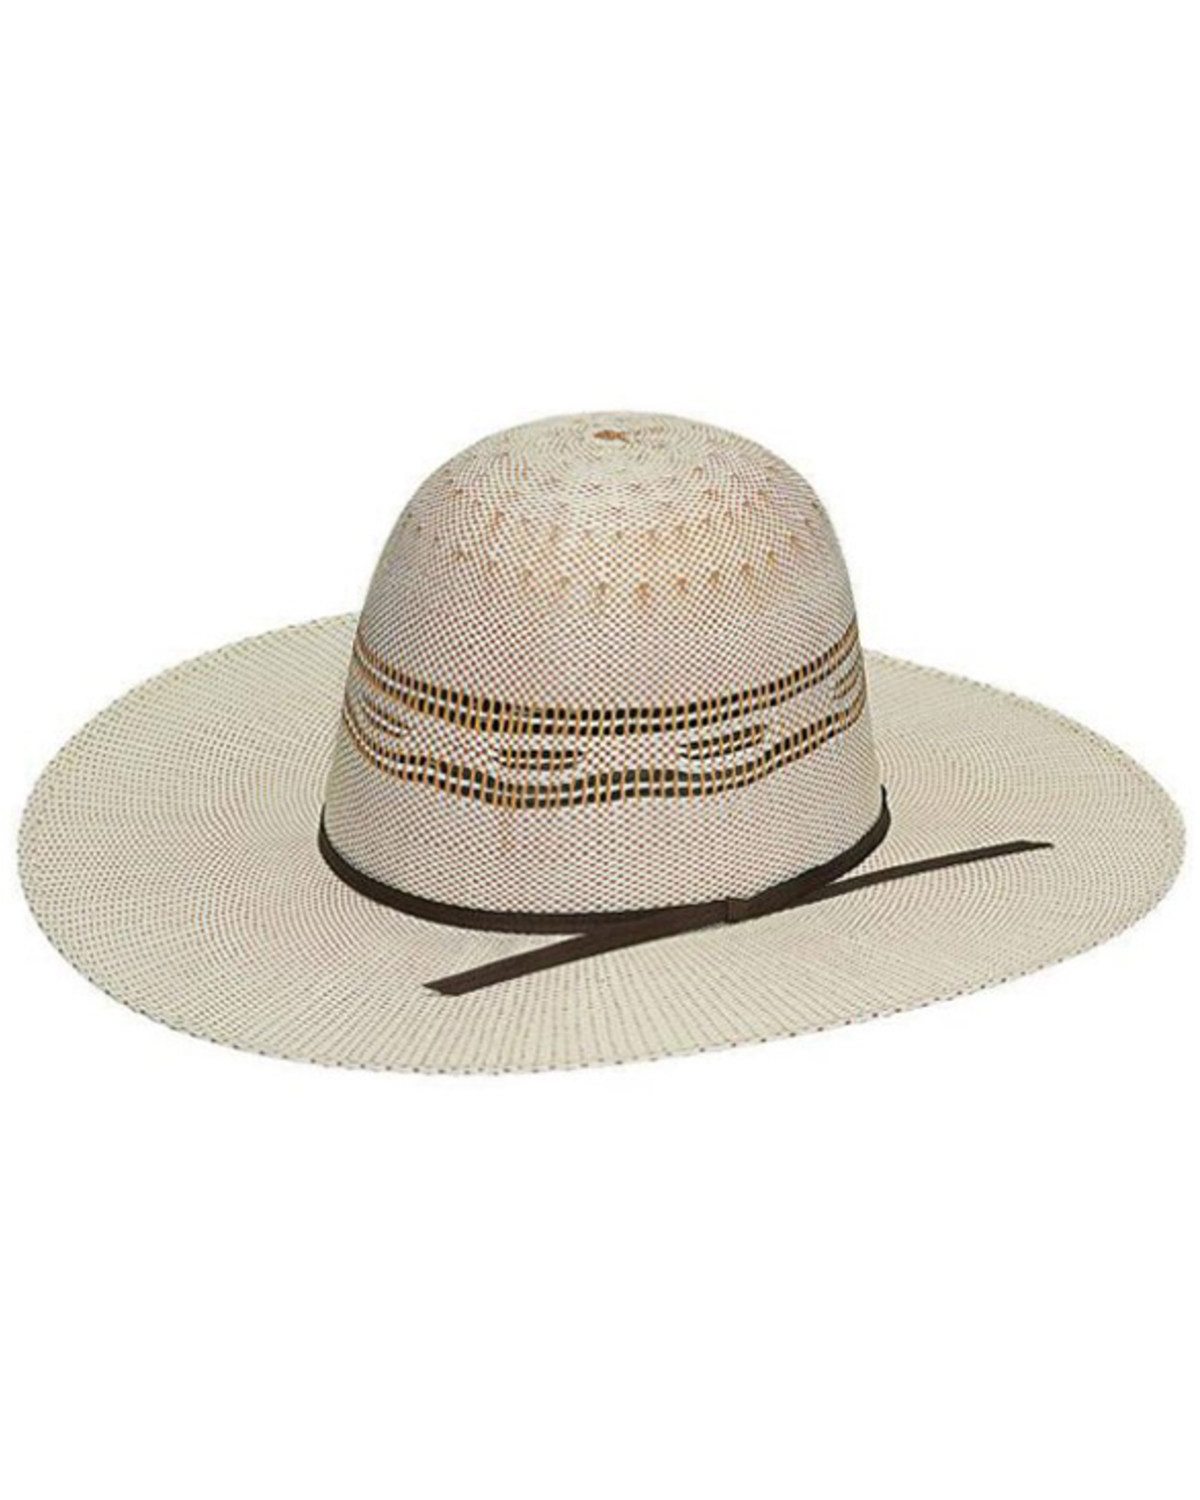 M & F Western Kids' Straw Cowboy Hat